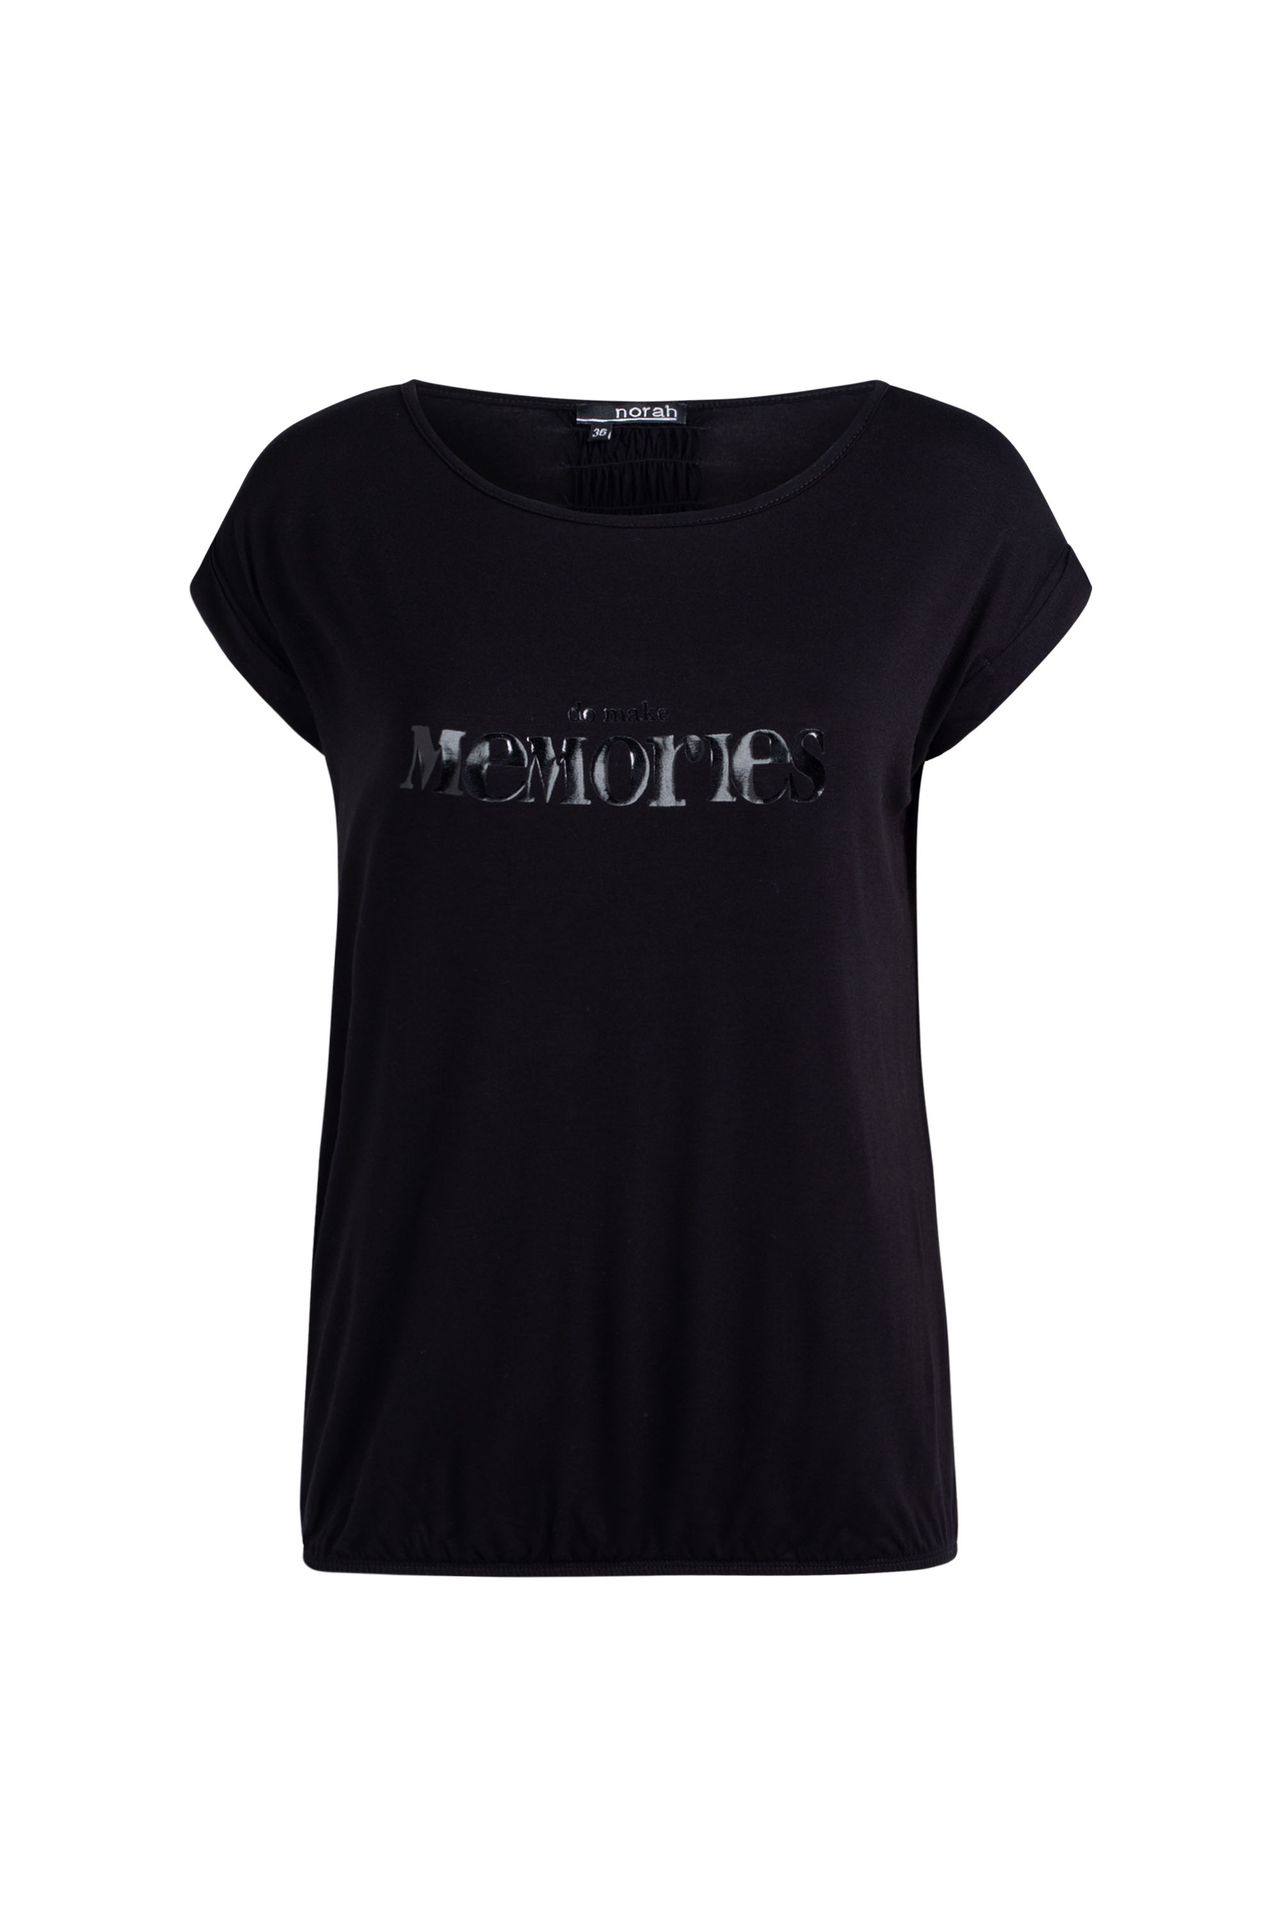 Norah Shirt zwart black 211497-001